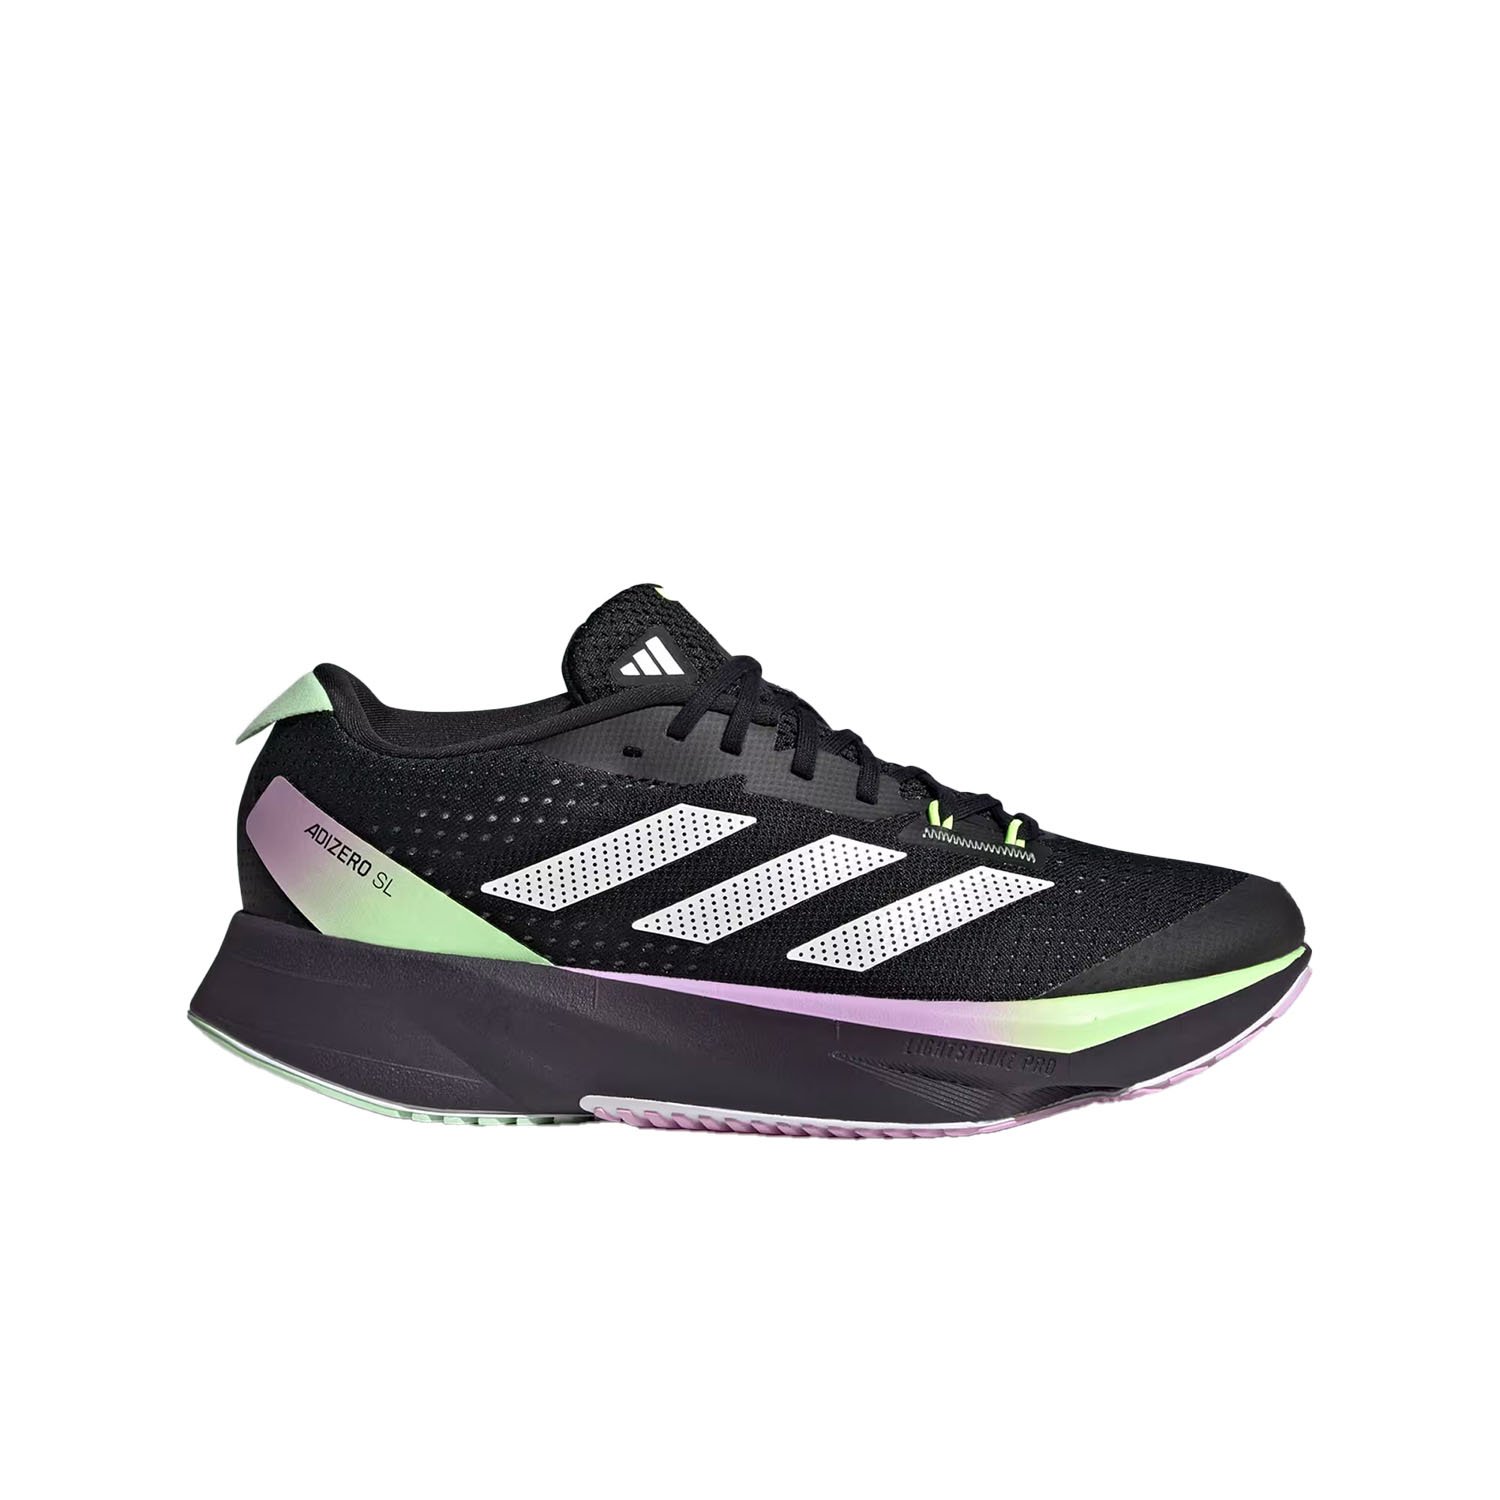 Adidas Adizero SL Kadın Yol Koşu Ayakkabısı - Siyah - 1